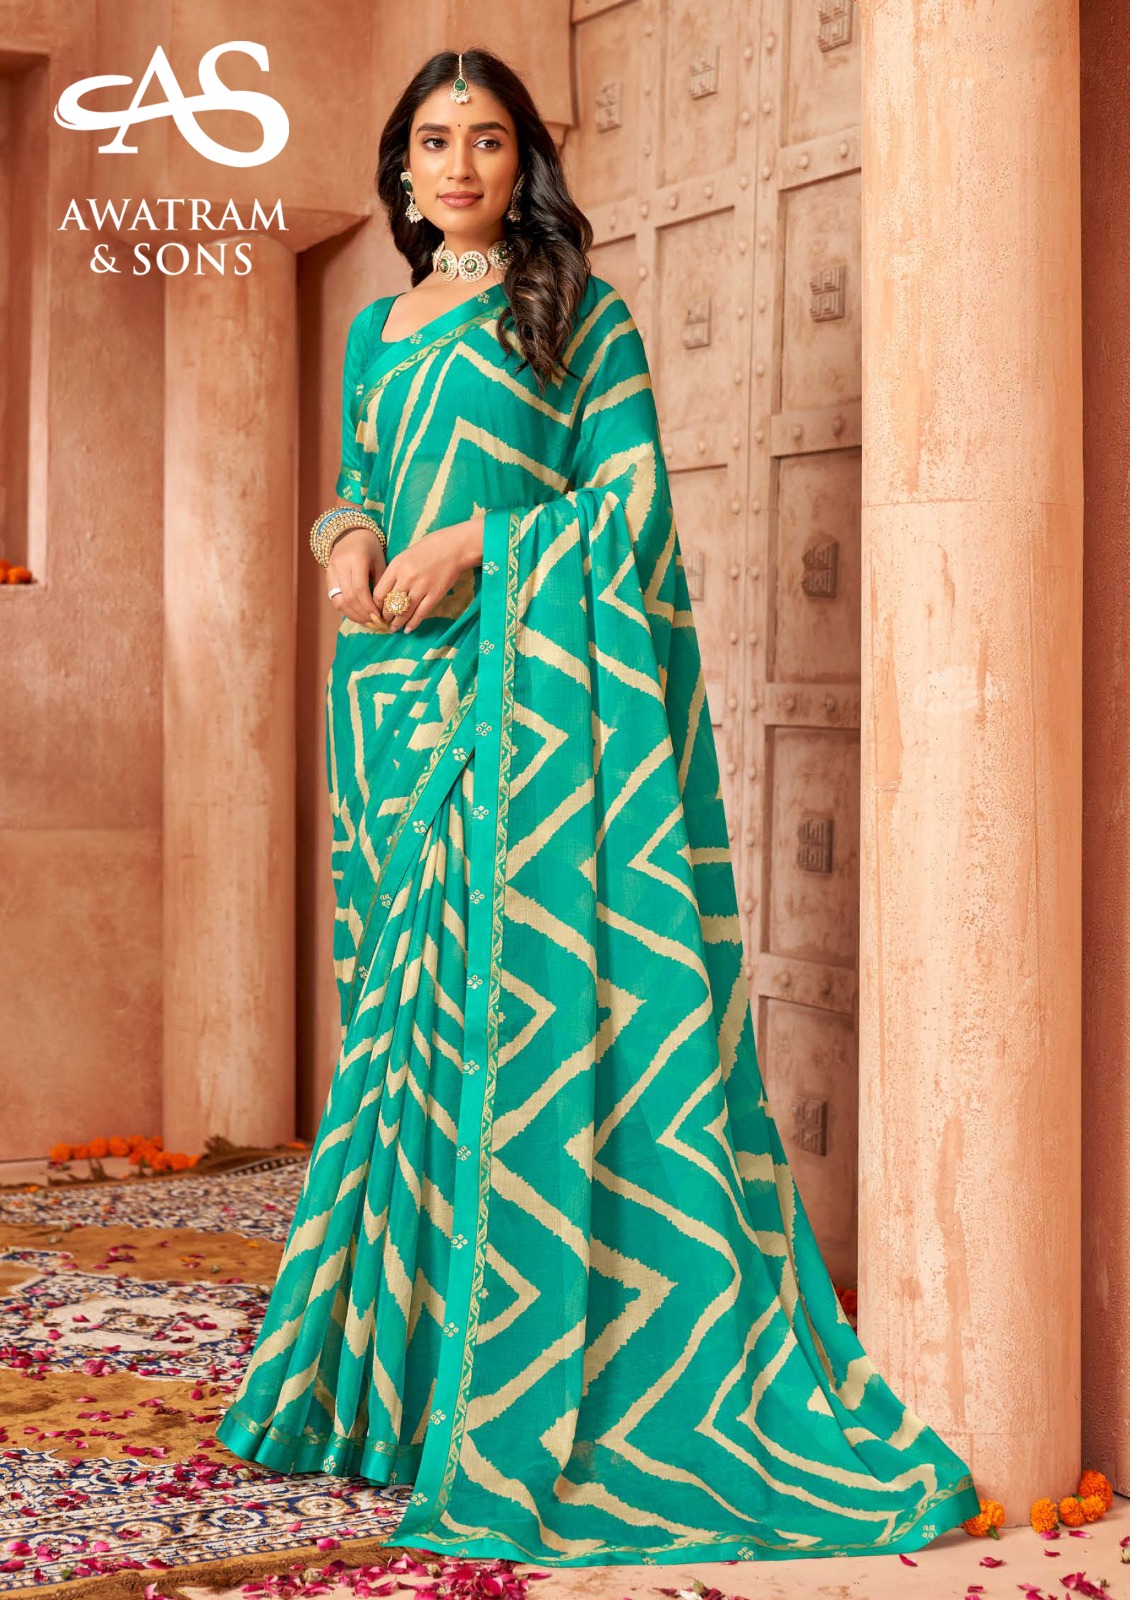 Rust Color Designer Georgette Saree With Blouse Pics at Rs 1298 | Designer  Sarees in New Delhi | ID: 12375200391